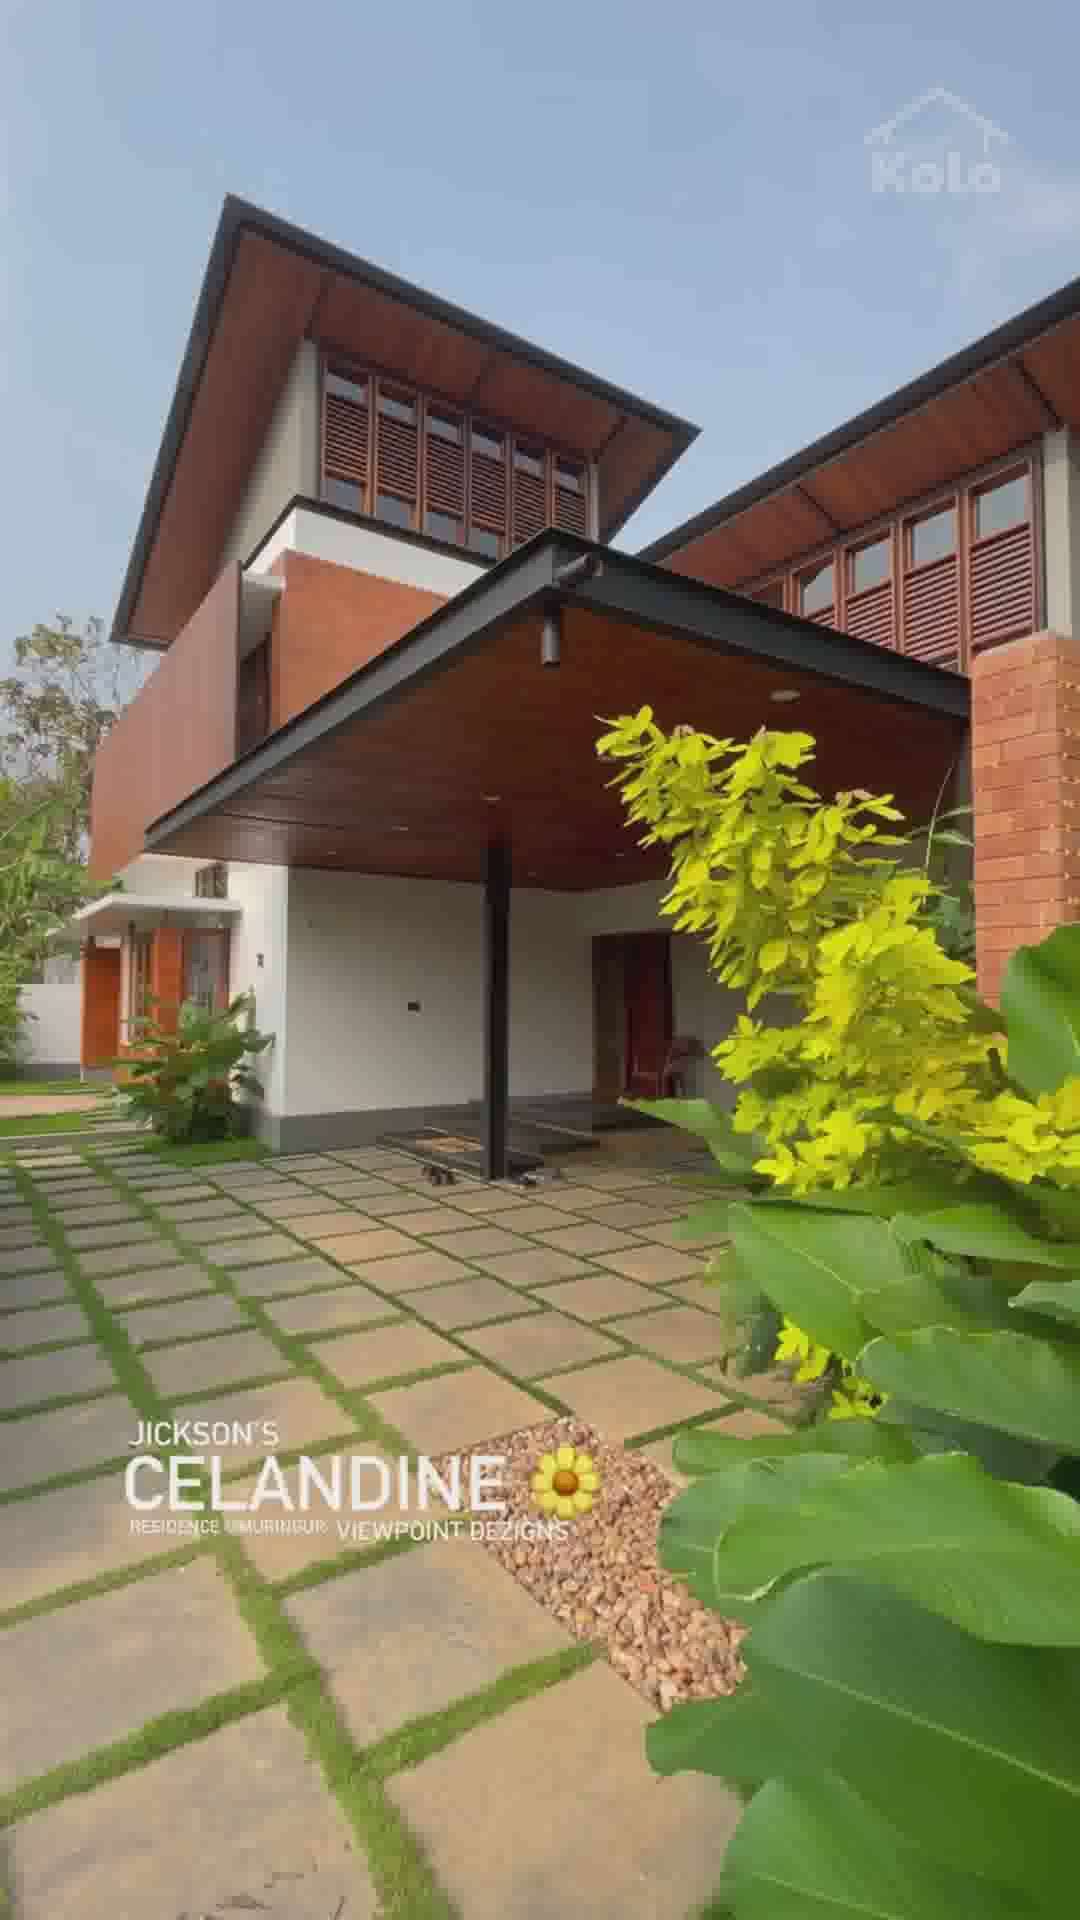 Jickson's CELANDINE | Thrissur

Residence for Jickson Jisha and their 2 daughters at Muringoor Thrissur
Architect Firm: VIEWPOINT DEZIGNS
Design team:
Shyam Raj Chandroth @ar.shyamraj
@amal_raj_chandroth
@siyad_sidhik

Client: Jickson Jisha
Location: Muringoor, Thrissur

Kolo - India’s Largest Home Construction Community :house:

#home #keralahouse #residence #residencedesign #house #koloapp #keralagram #reelitfeelit #keralagodsowncountry #homedecor #homedesign #keralahomedesignz #keralavibes #instagood #interiordesign #interior #interiordesigner #homedecoration #homedesignideas #keralahomes #homedecor #homes #traditional #kerala #homesweethome #architecturedesign #architecture #keralaarchitecture